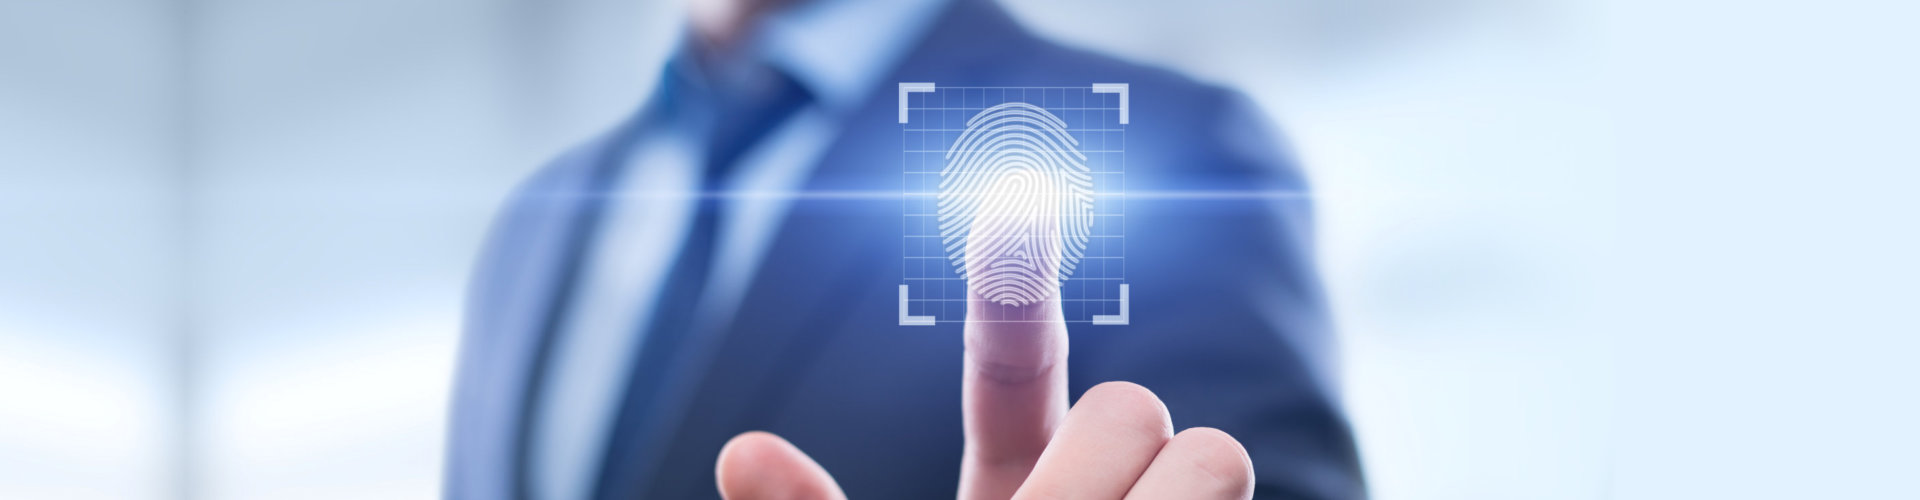 Fingerprint scan provides security access